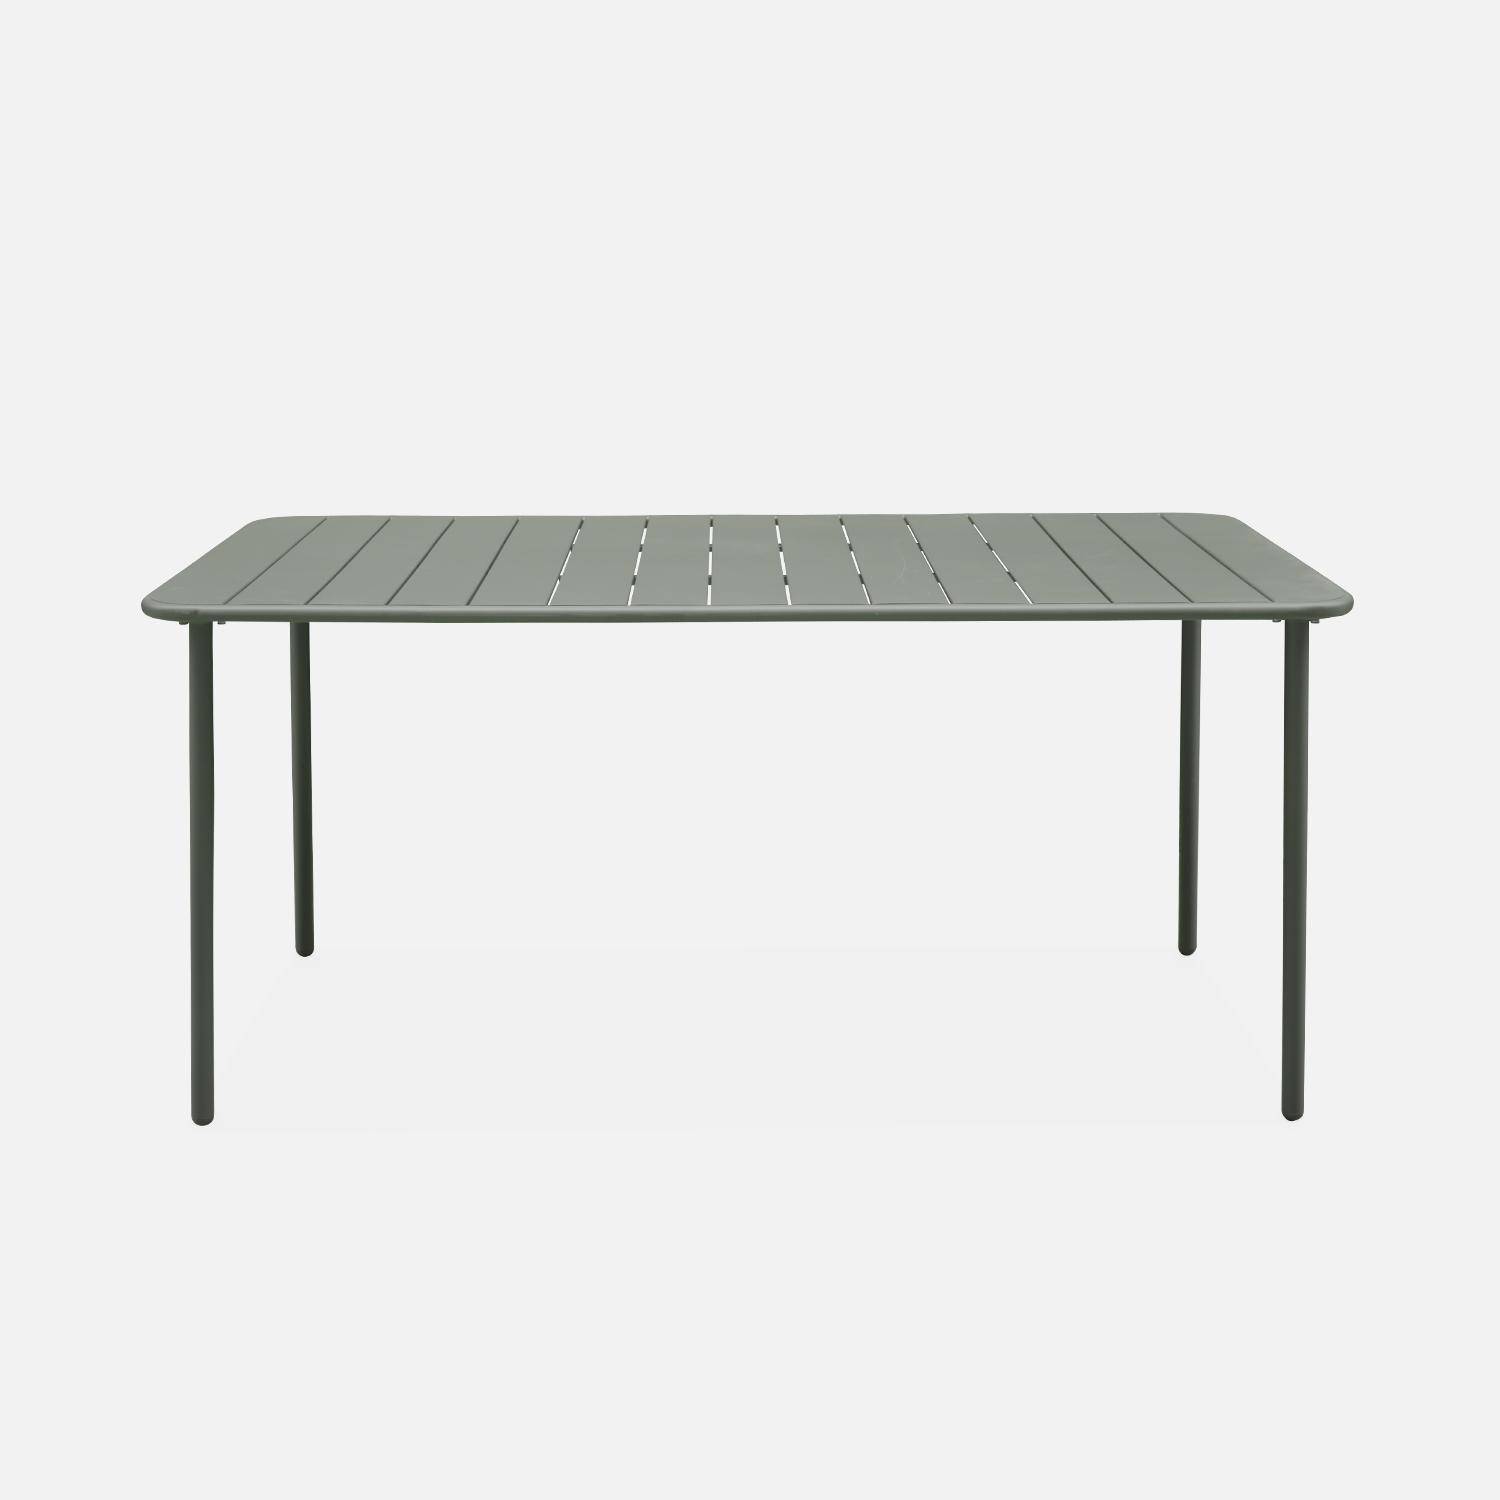 6-8 Seater metal garden table, 160x90xH72.5cm, green Photo5